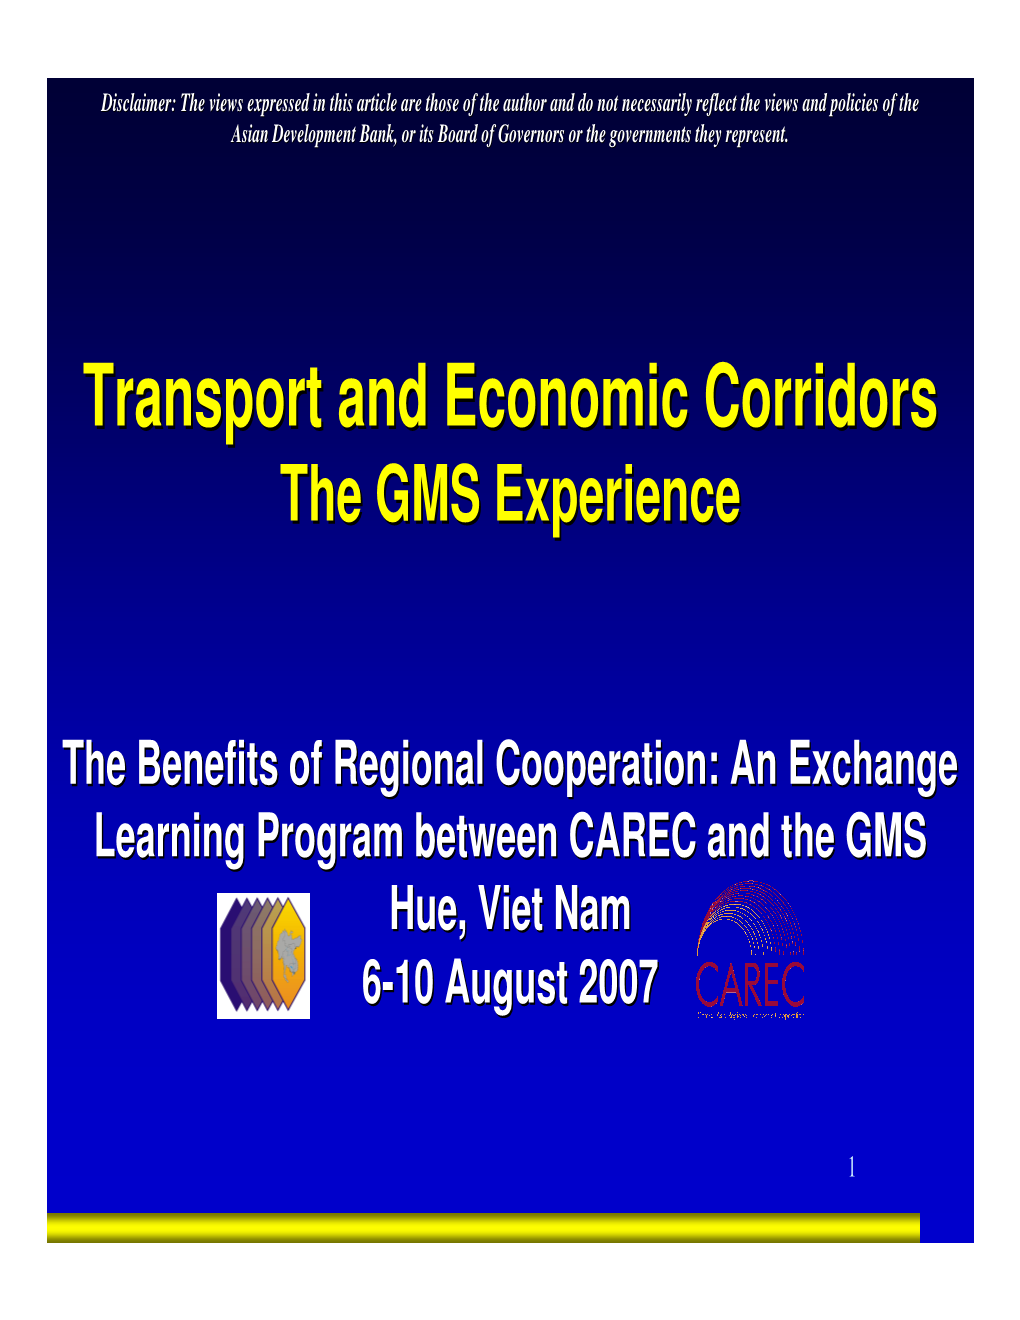 Transport and Economic Corridors